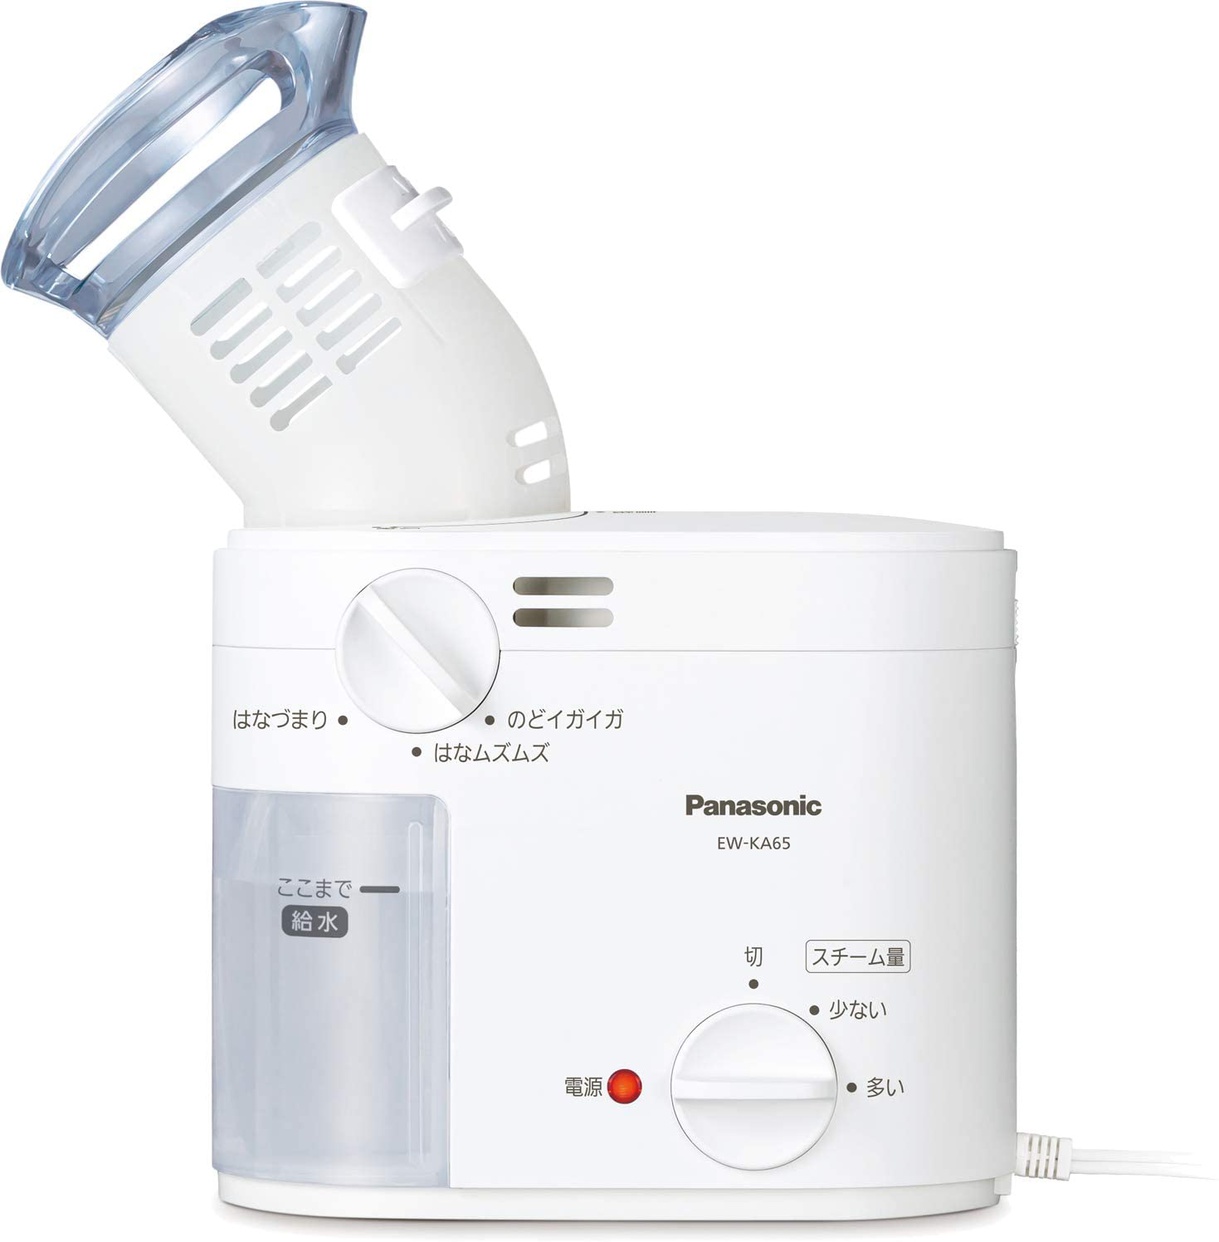 Panasonic(パナソニック) スチーム吸入器 EW-KA65-Wの商品画像1 